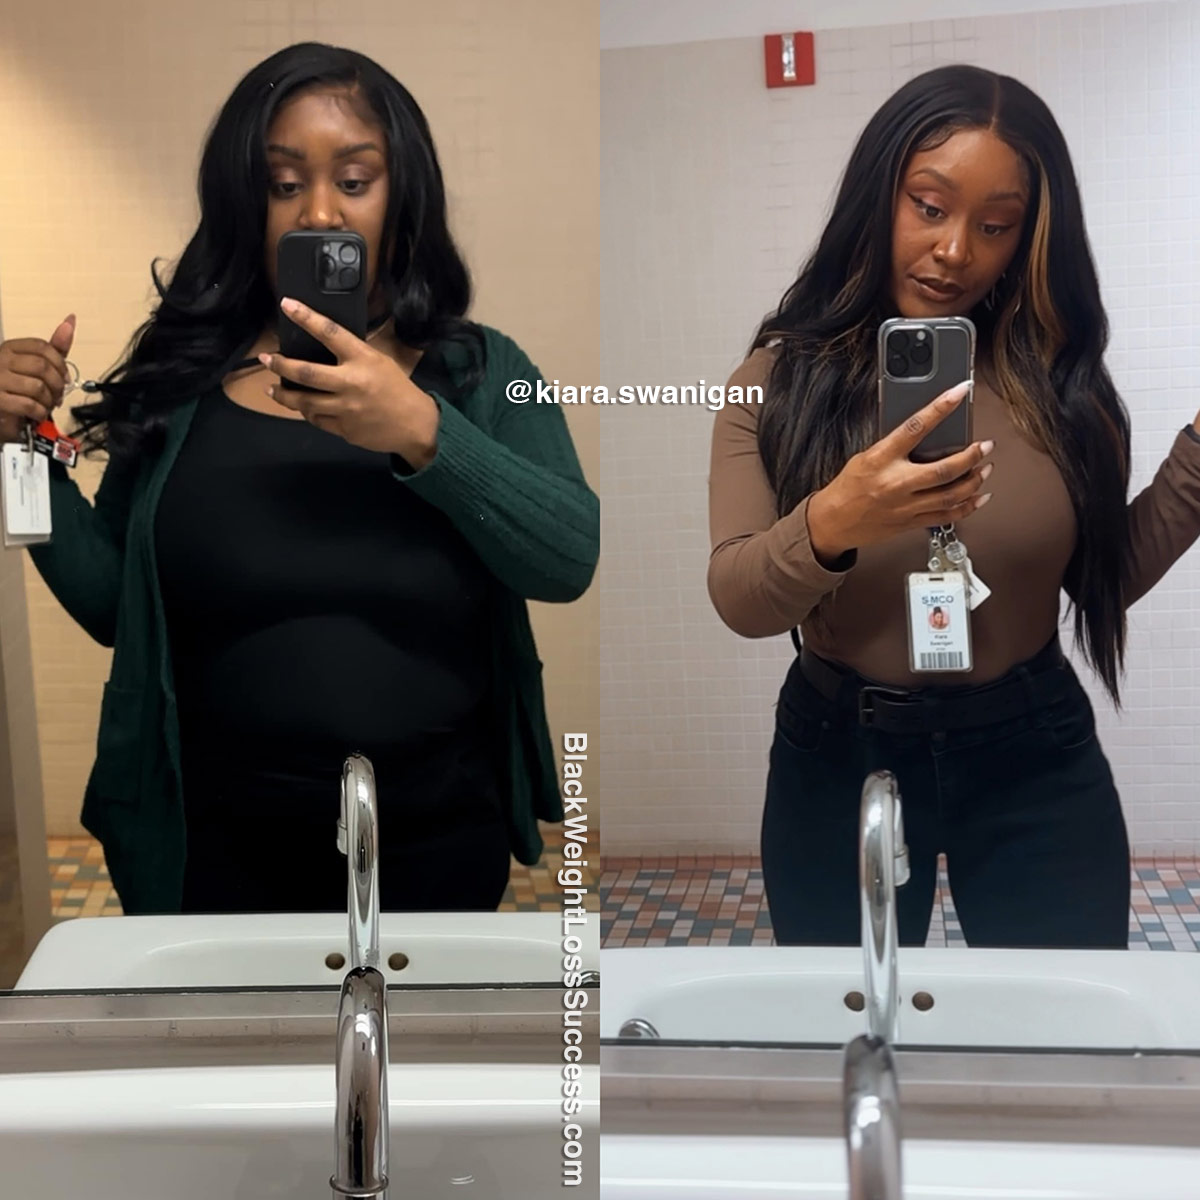 Kiara lost 50 pounds | Black Weight Loss Success